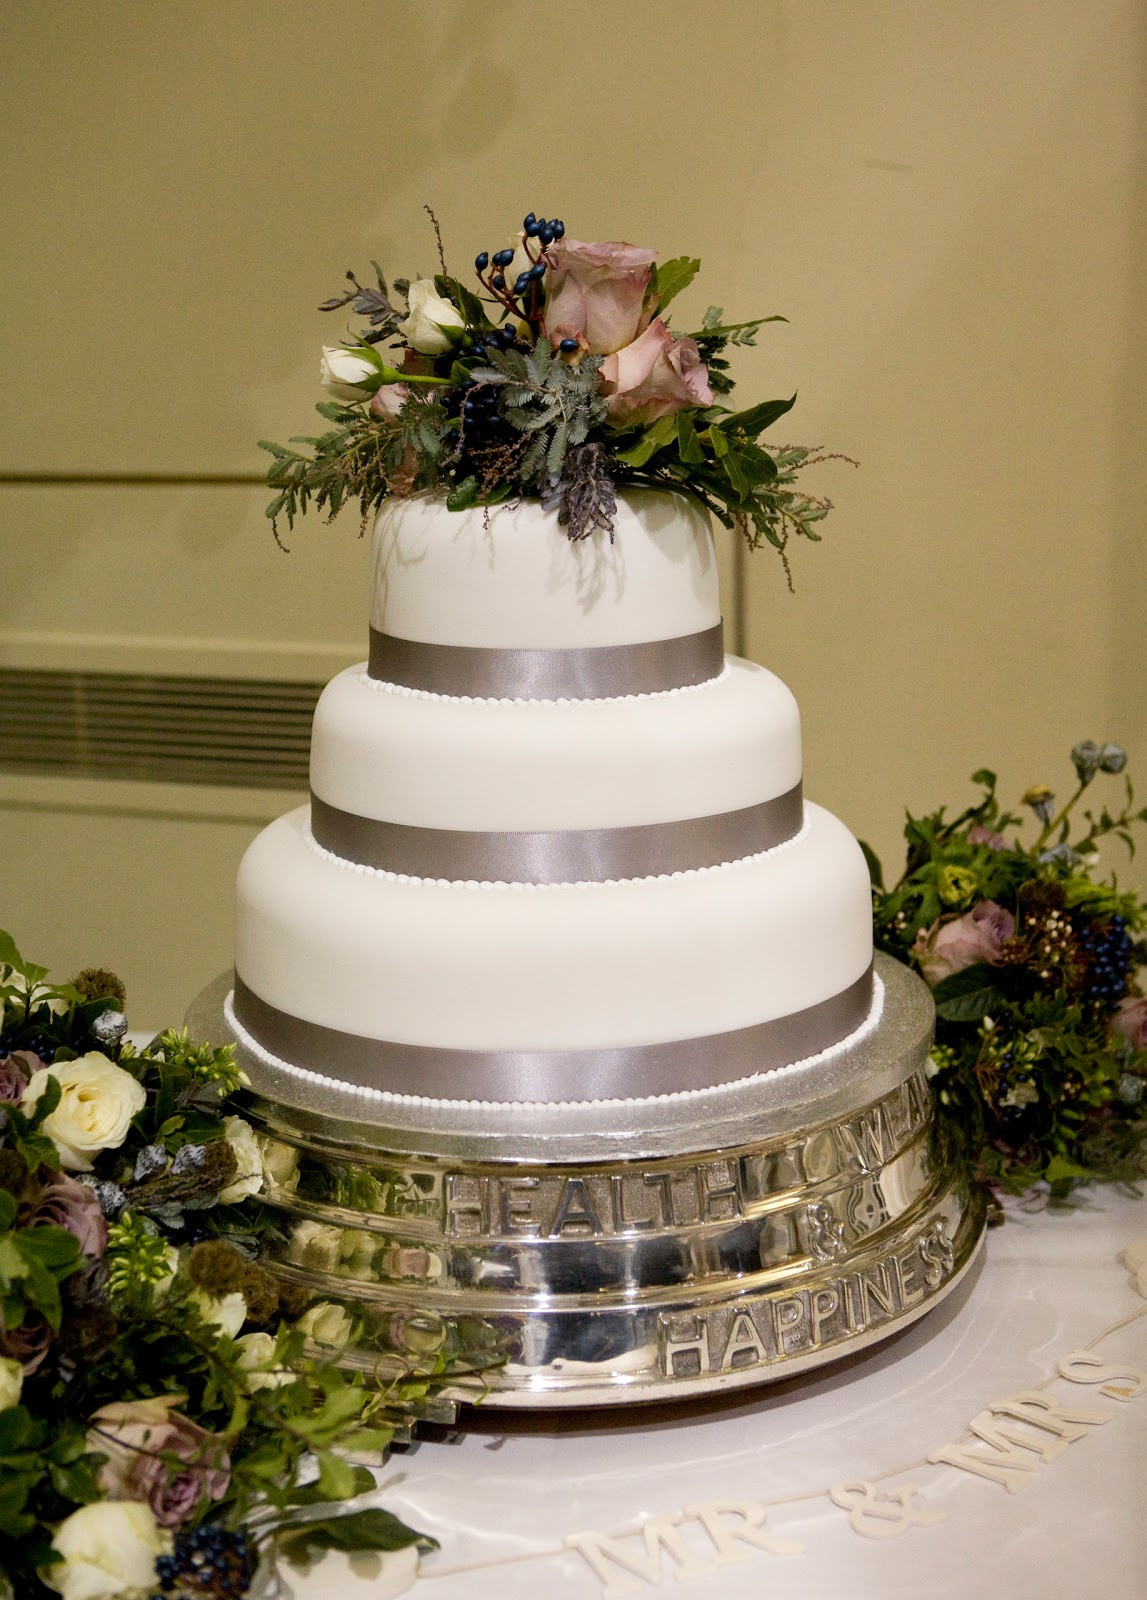 Vintage Wedding Cake Stand
 Hesta & The Pugs Vintage Wedding Cake Stand